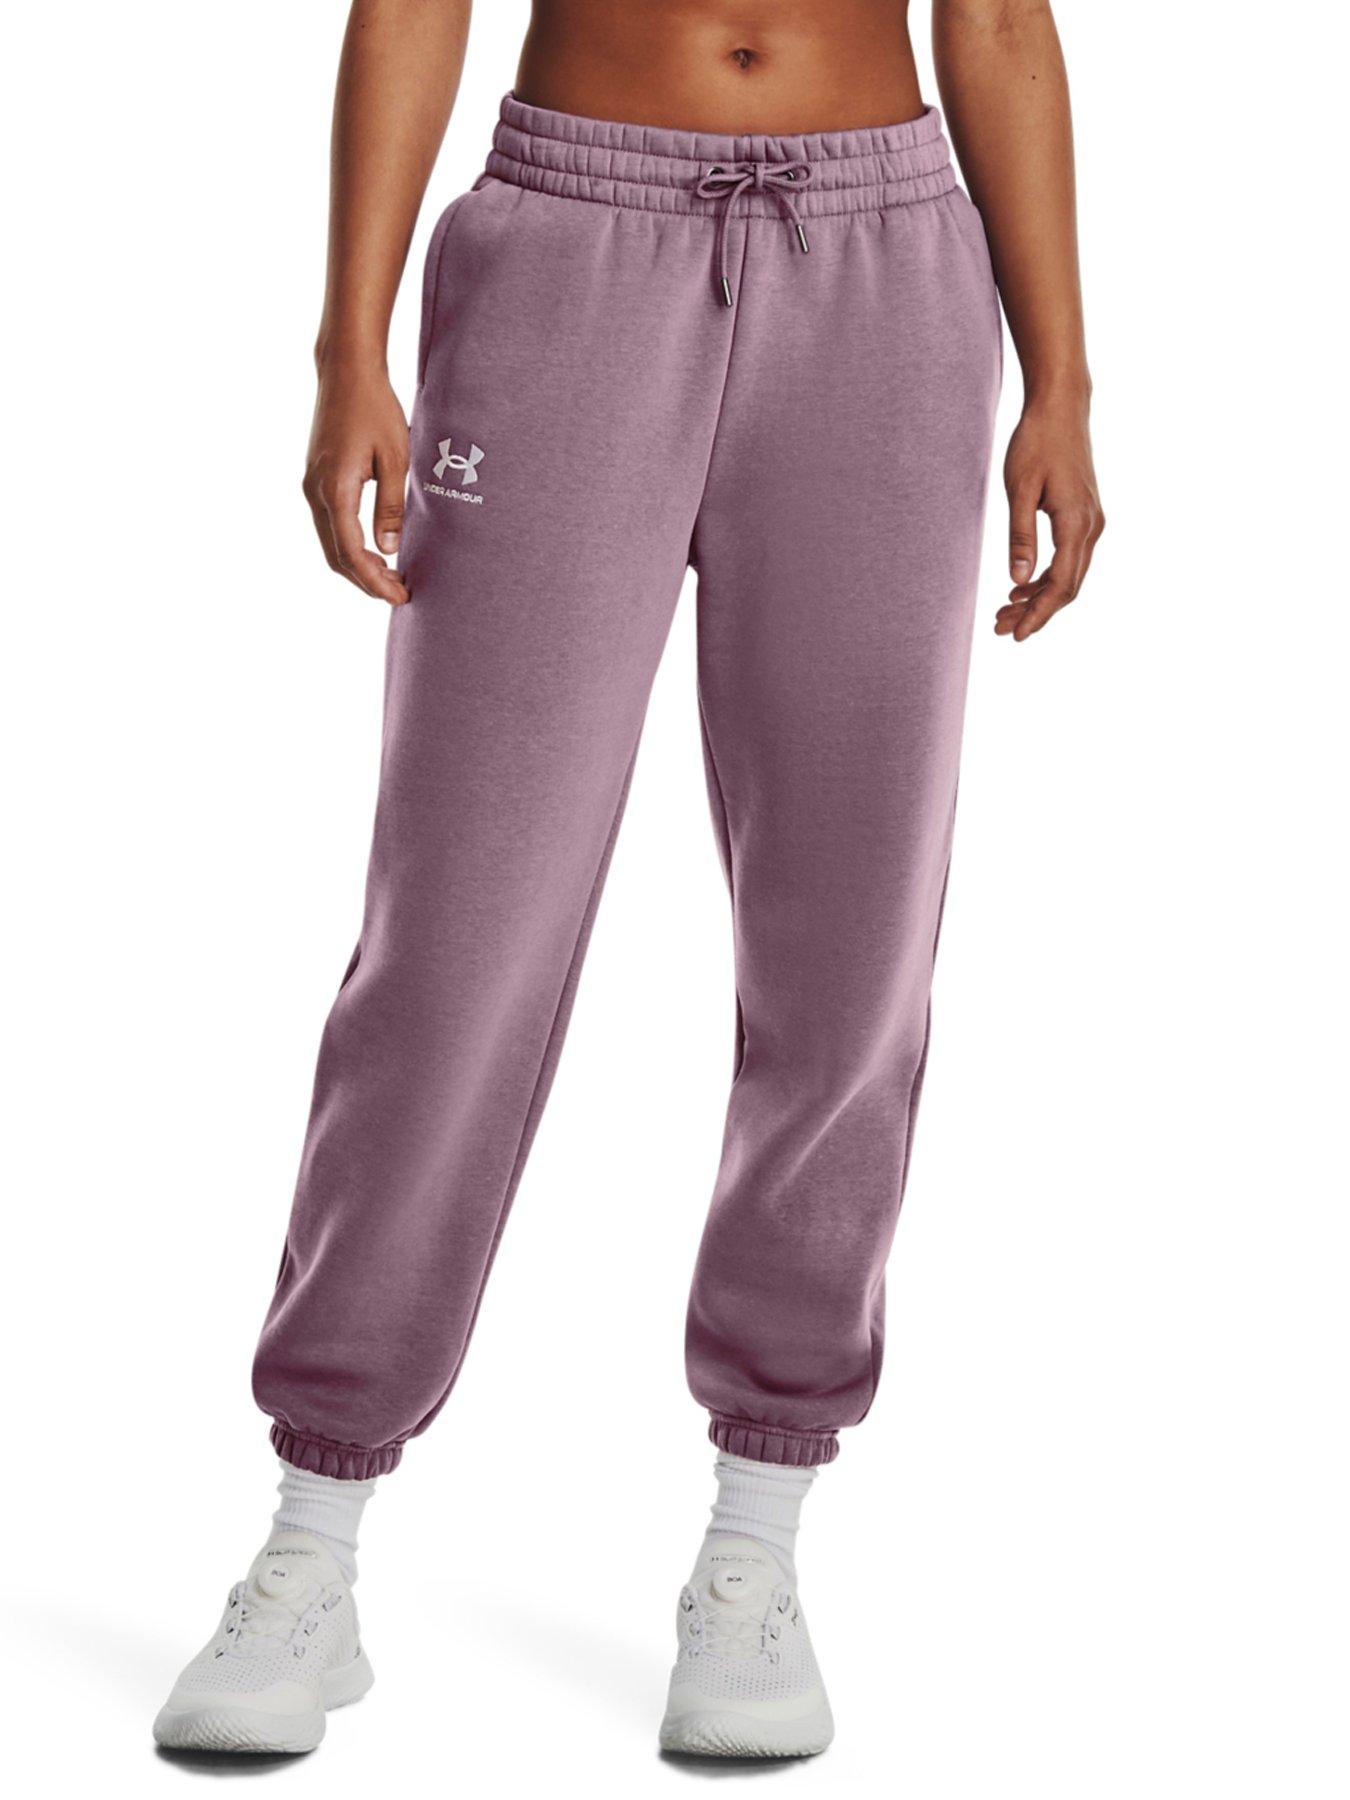 Women's Nike Air 7/8 Fleece Trousers S Purple Plum Sweatpants Pants Cuffed  Pant